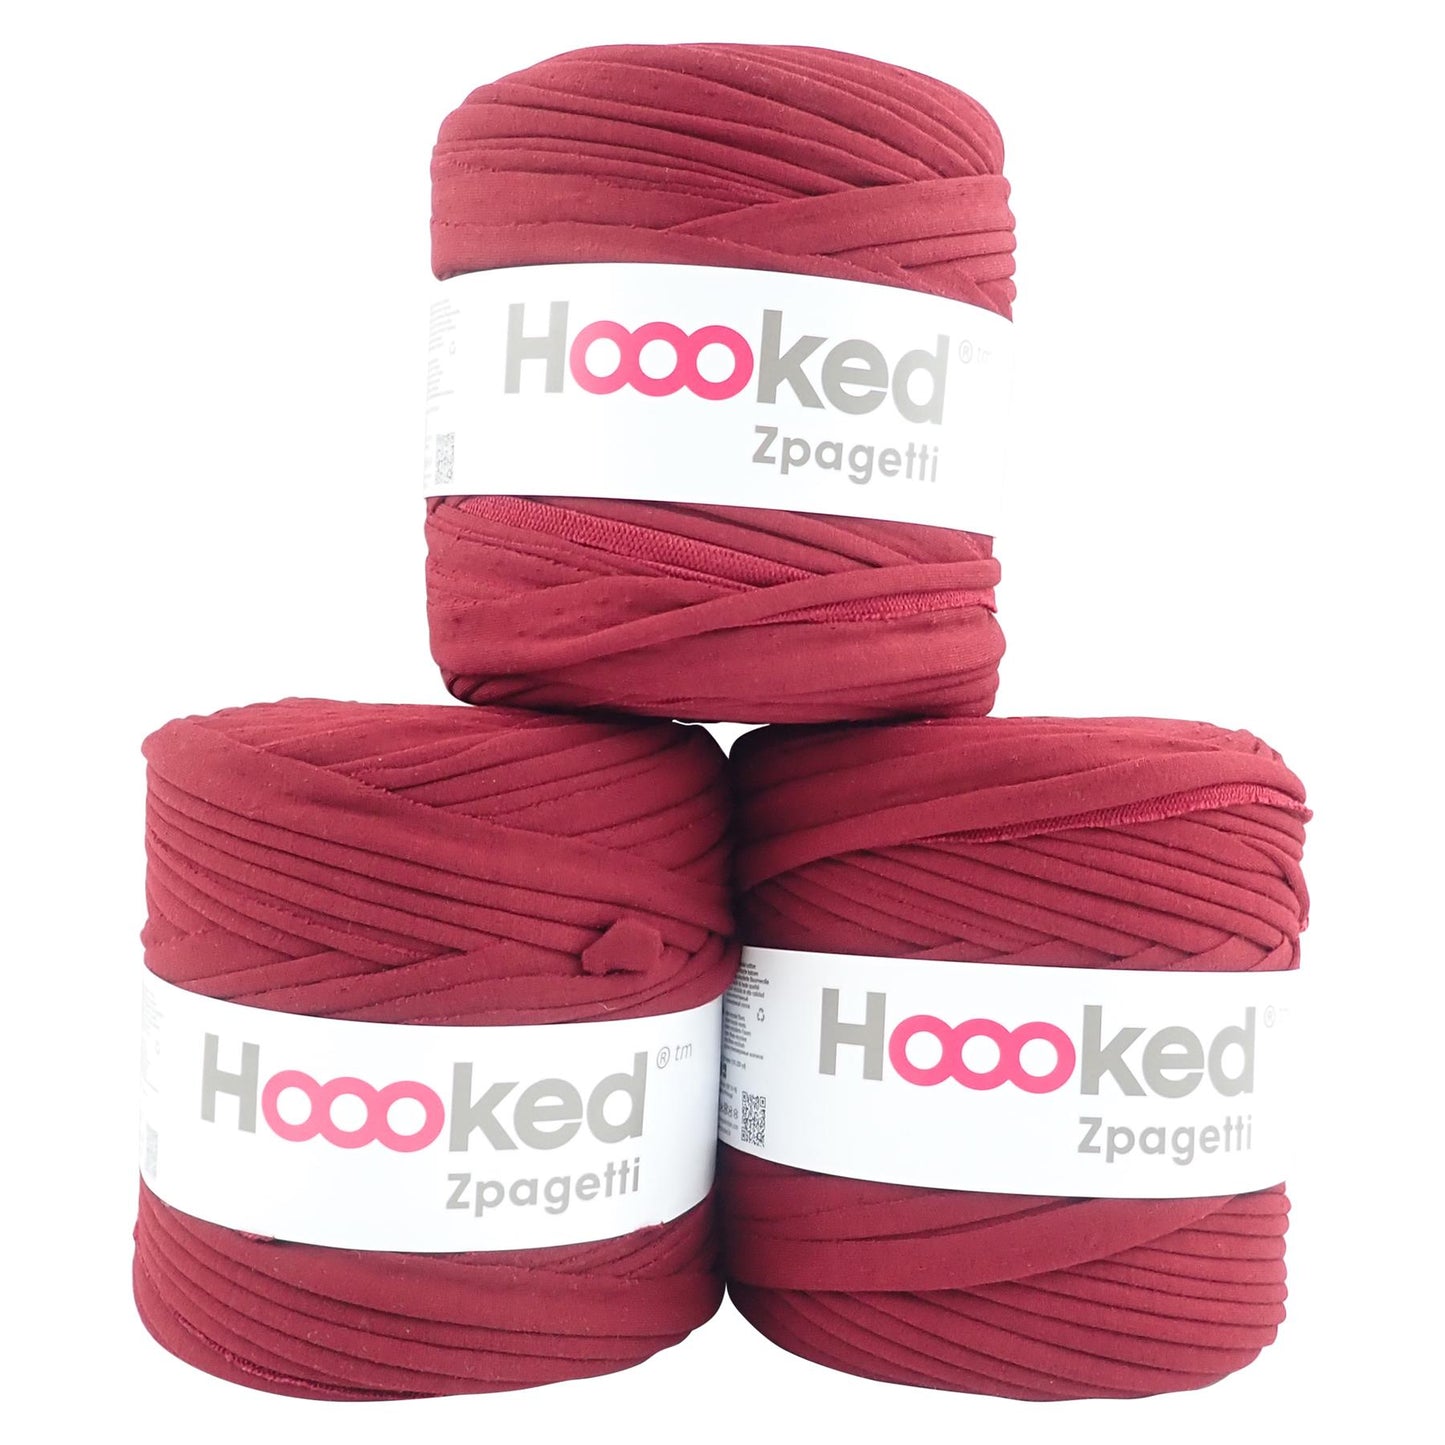 Hoooked Zpagetti Dark Red Cotton T-Shirt Yarn - 120M 700g (Pack of 3)